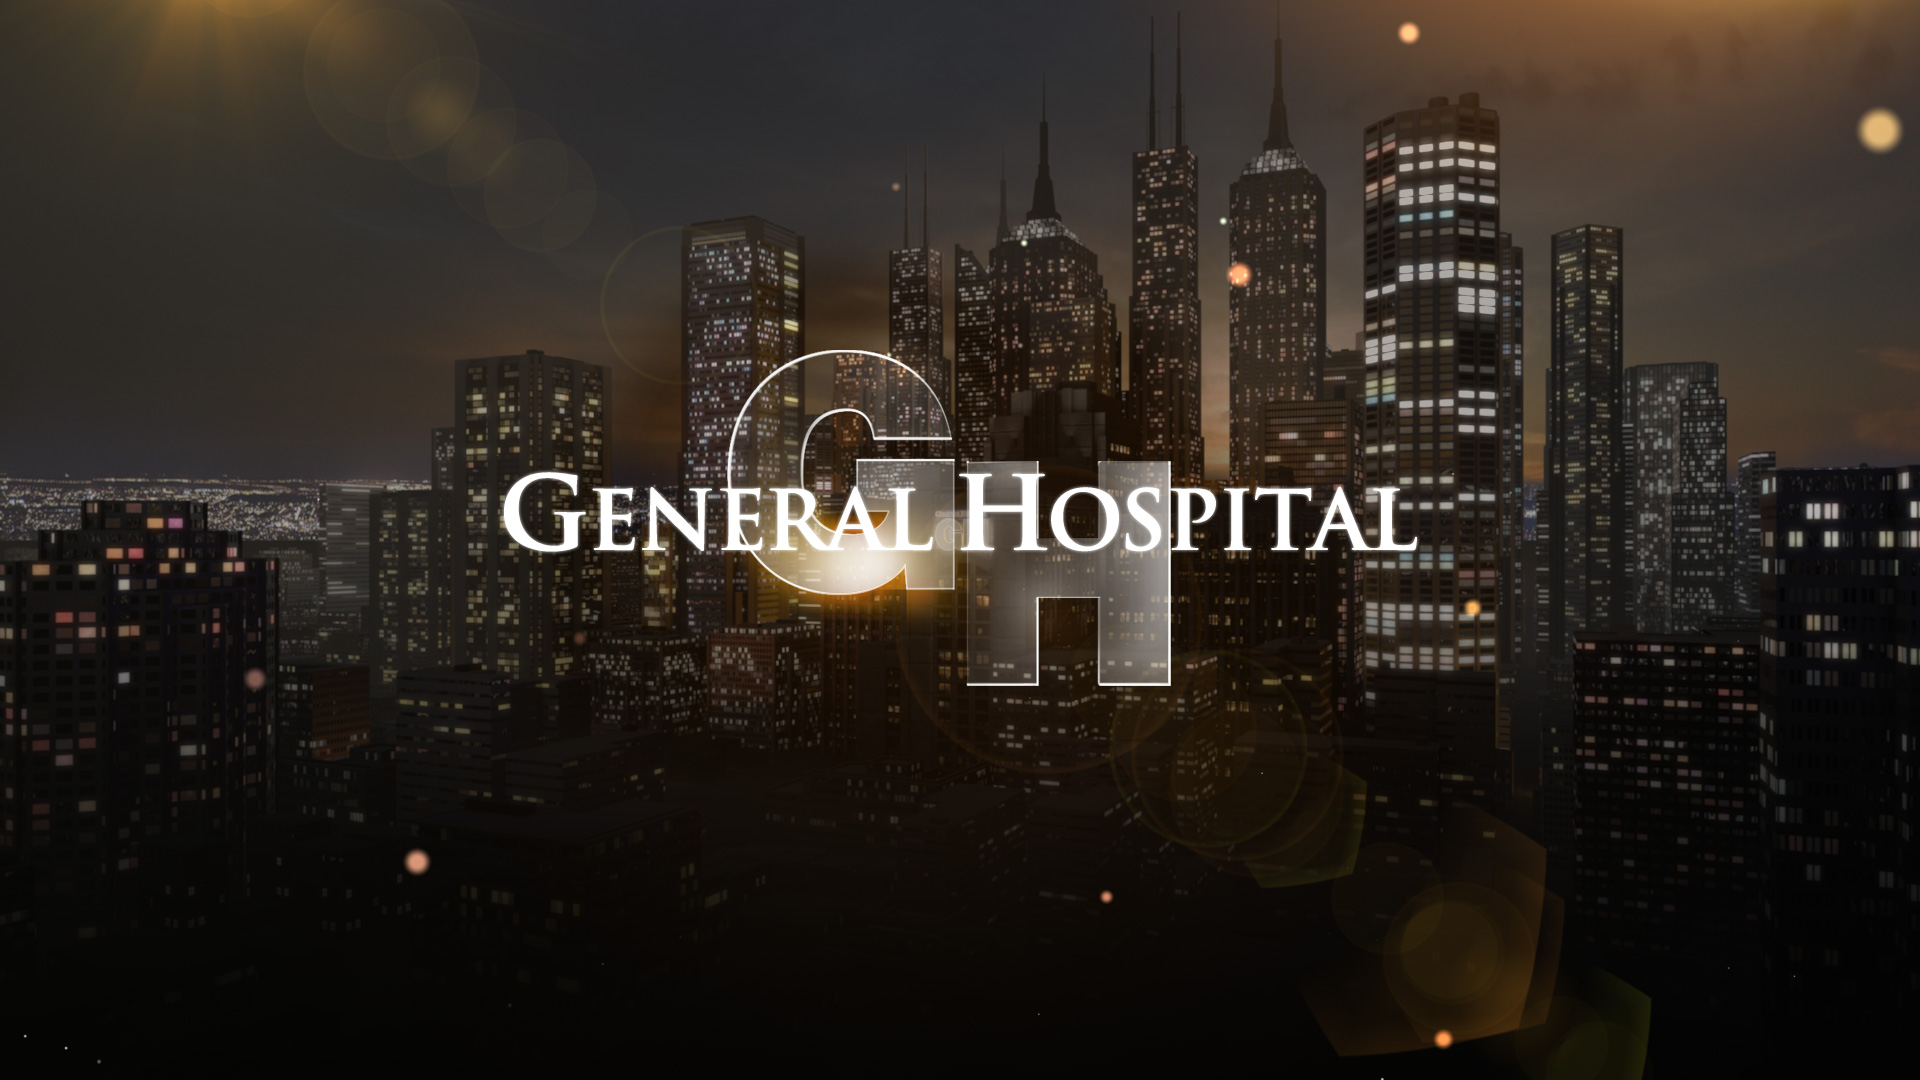 General Hospital Season 58 Spoilers Hint At Major Cast Changes Ahead!